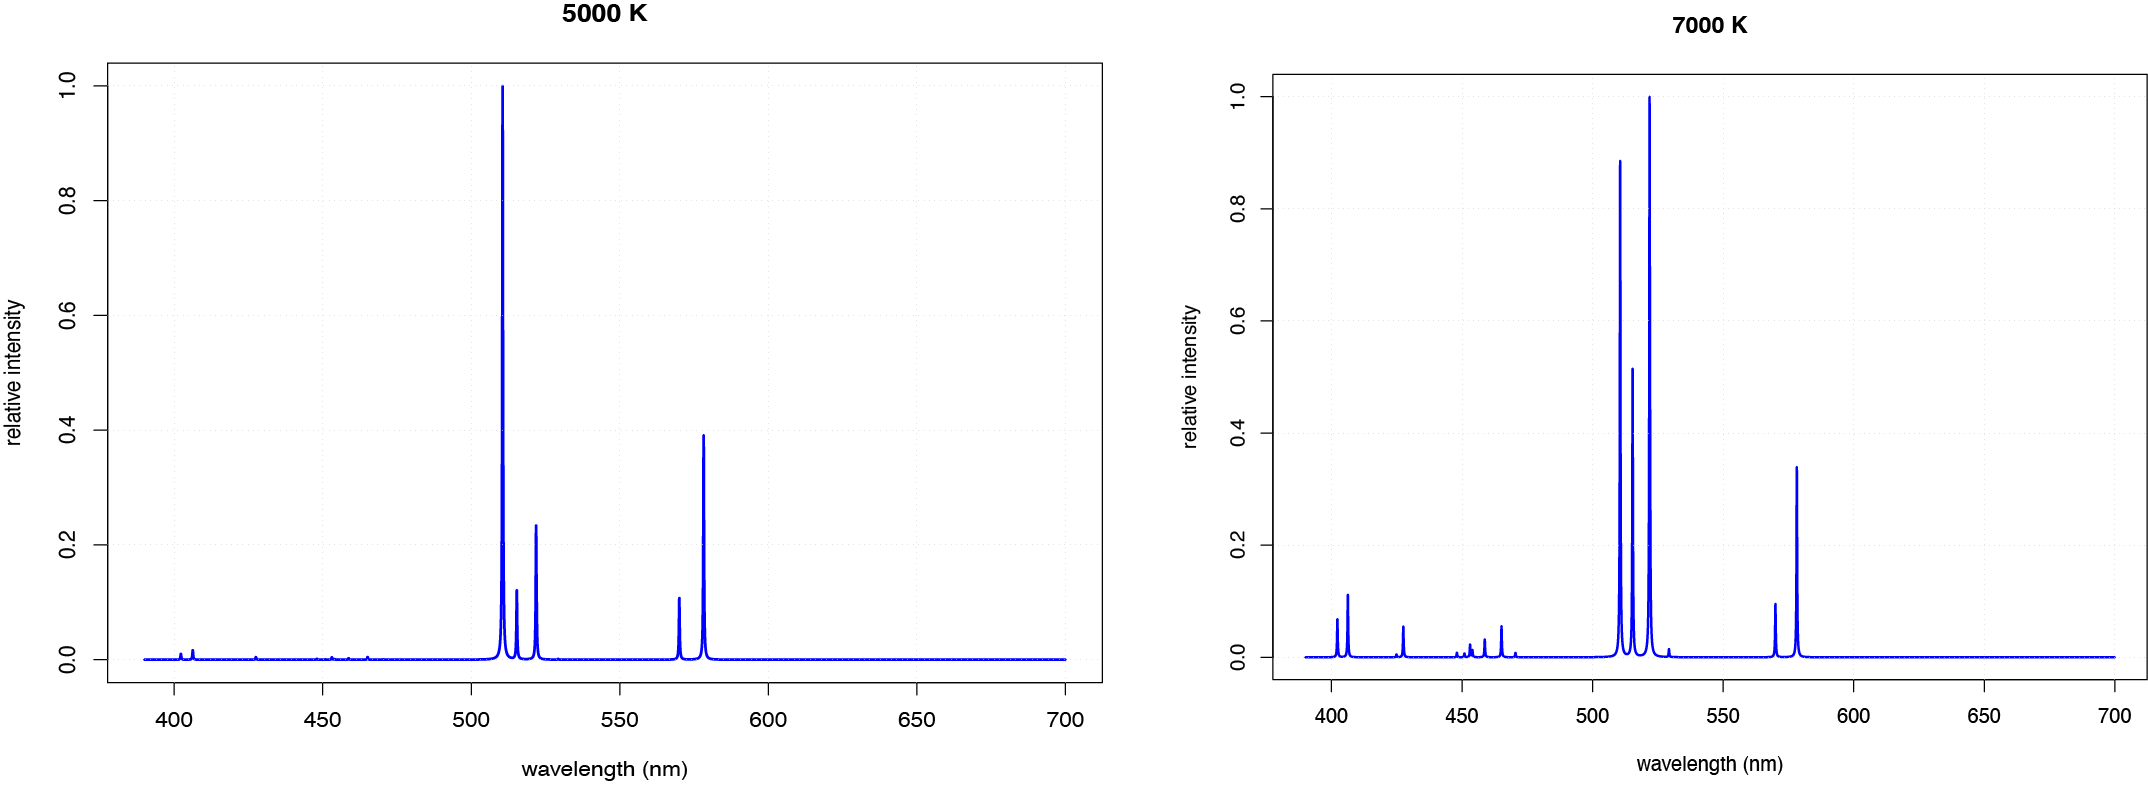 Atomic emission spectra for Cu at 5000 K and 7000 K. 